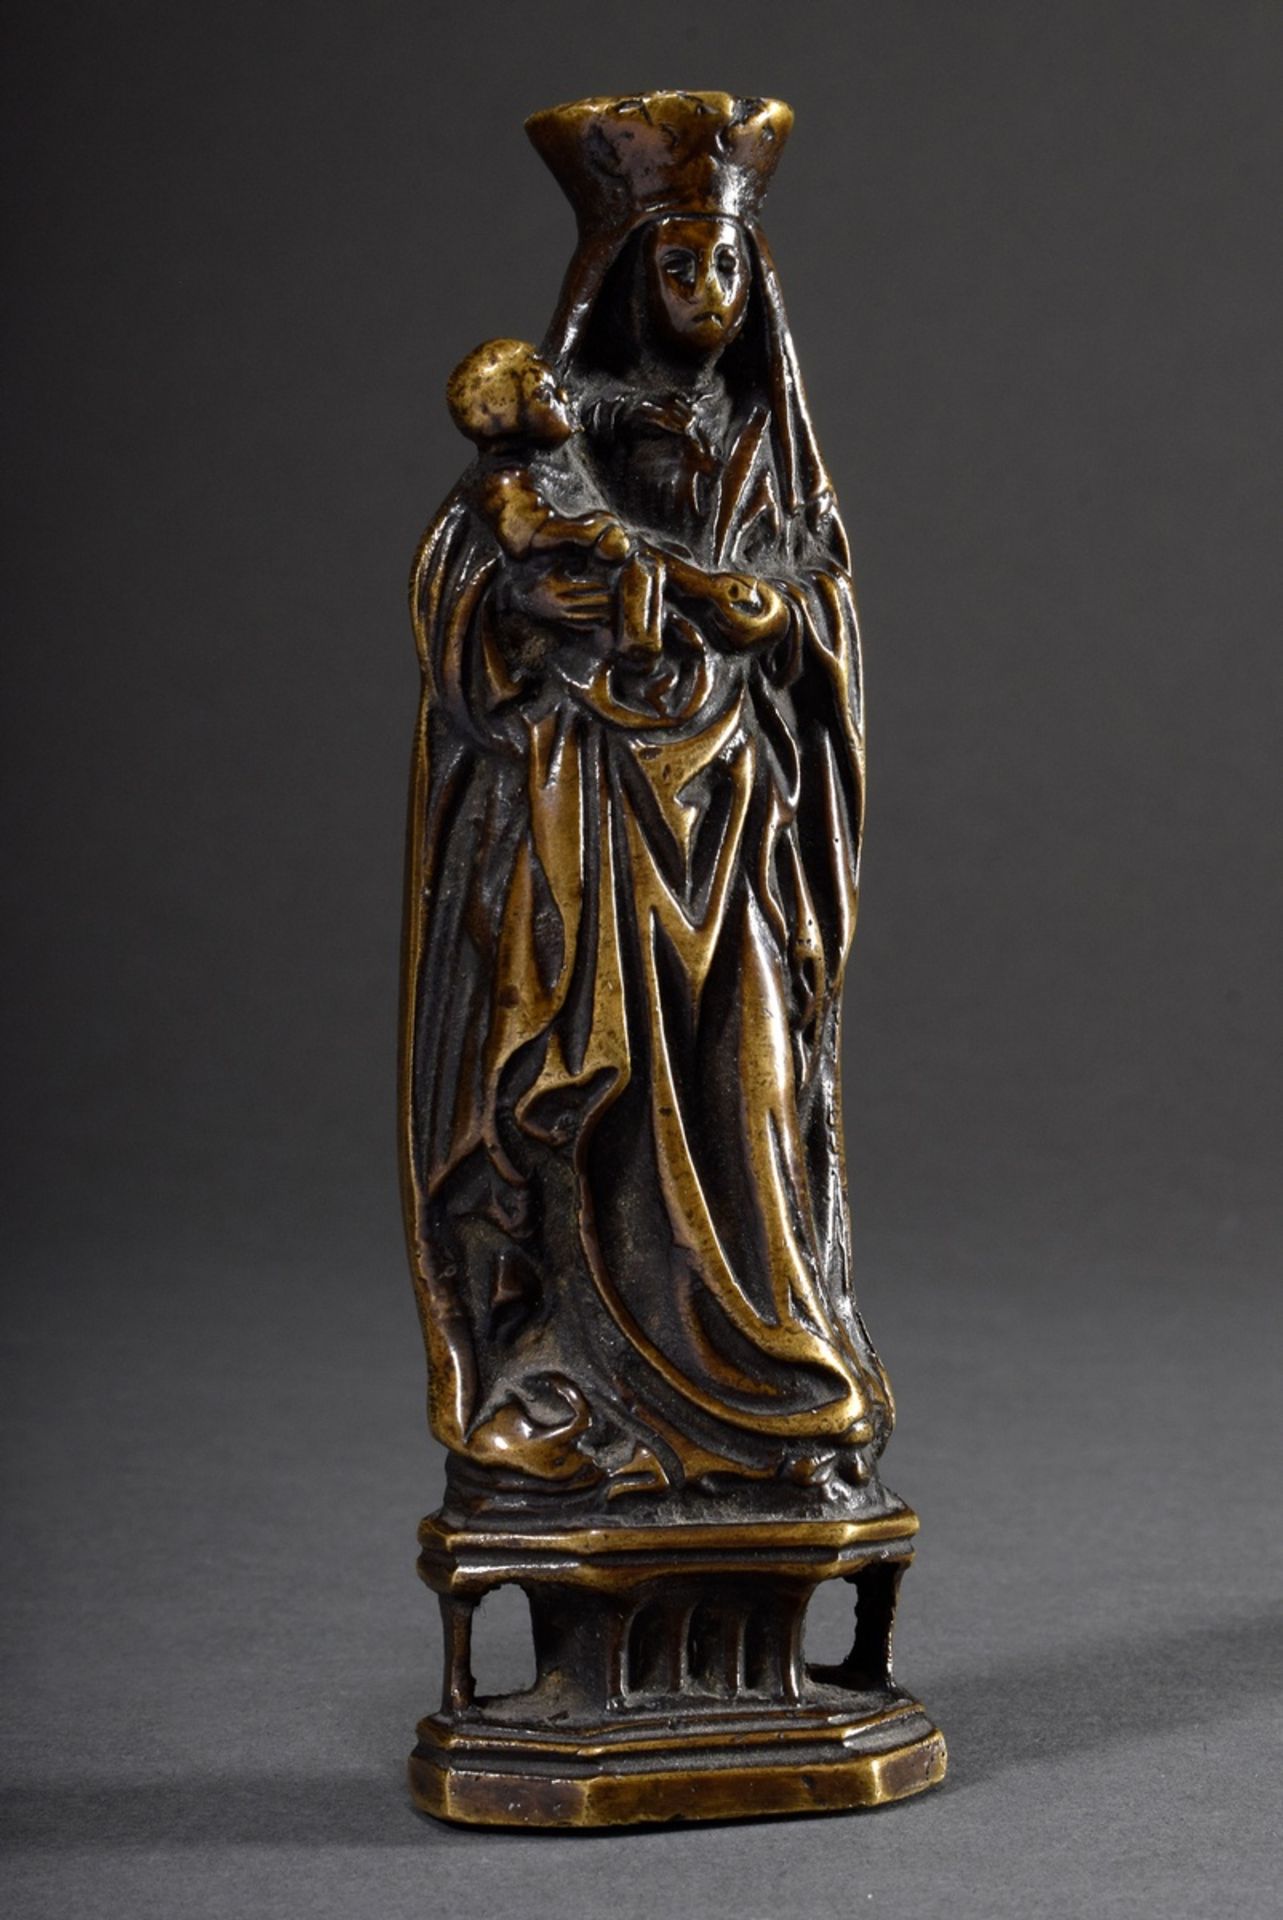 Medieval sacral figure "Crowned Madonna with Child", bronze, probably Netherlands (Utrecht) 16th ce